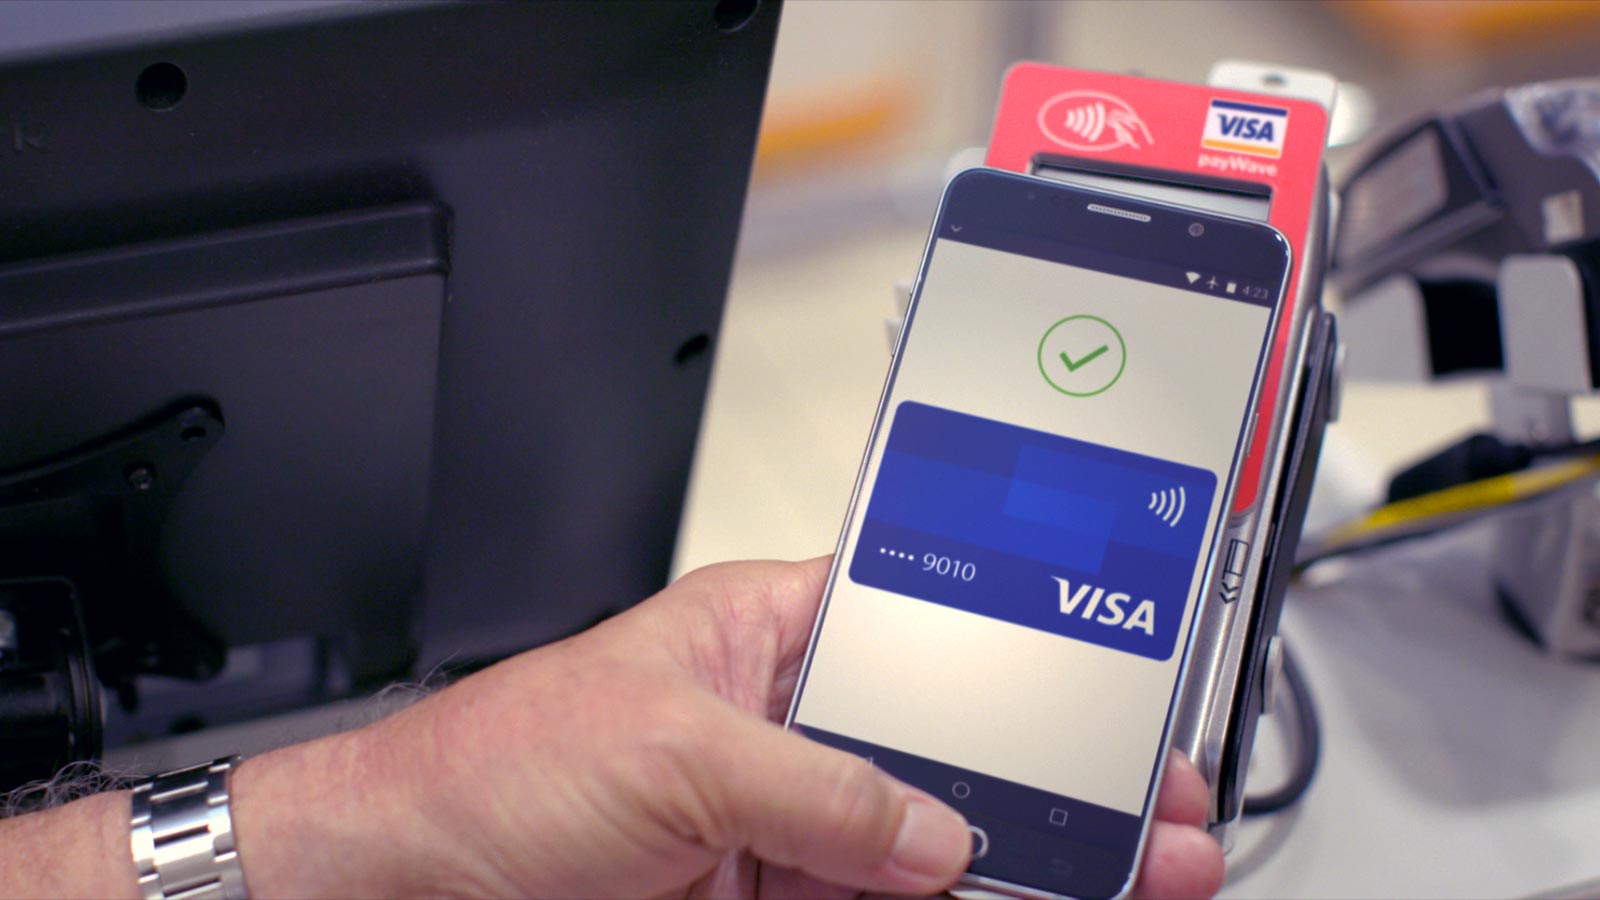 Visa Australia | Visa Mobile payWave